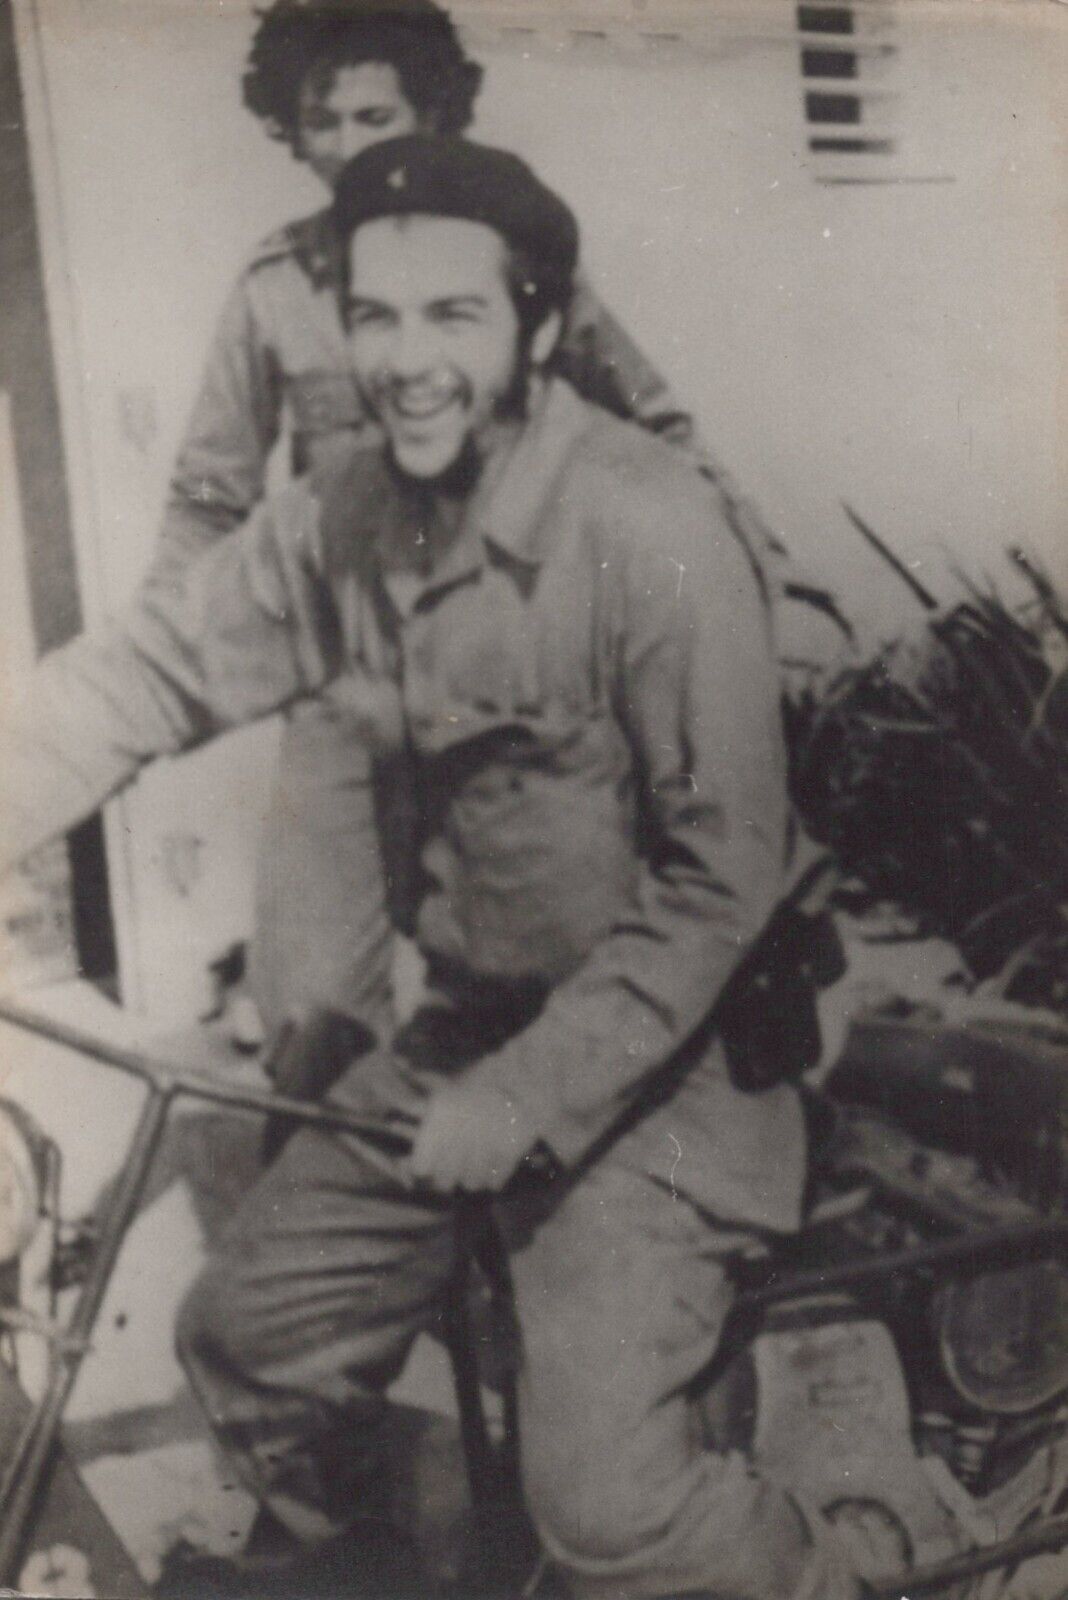 CUBAN REVOLUTION SMILING ERNESTO CHE GUEVARA RIDING BIKE CUBA 1960s Photo Y 395